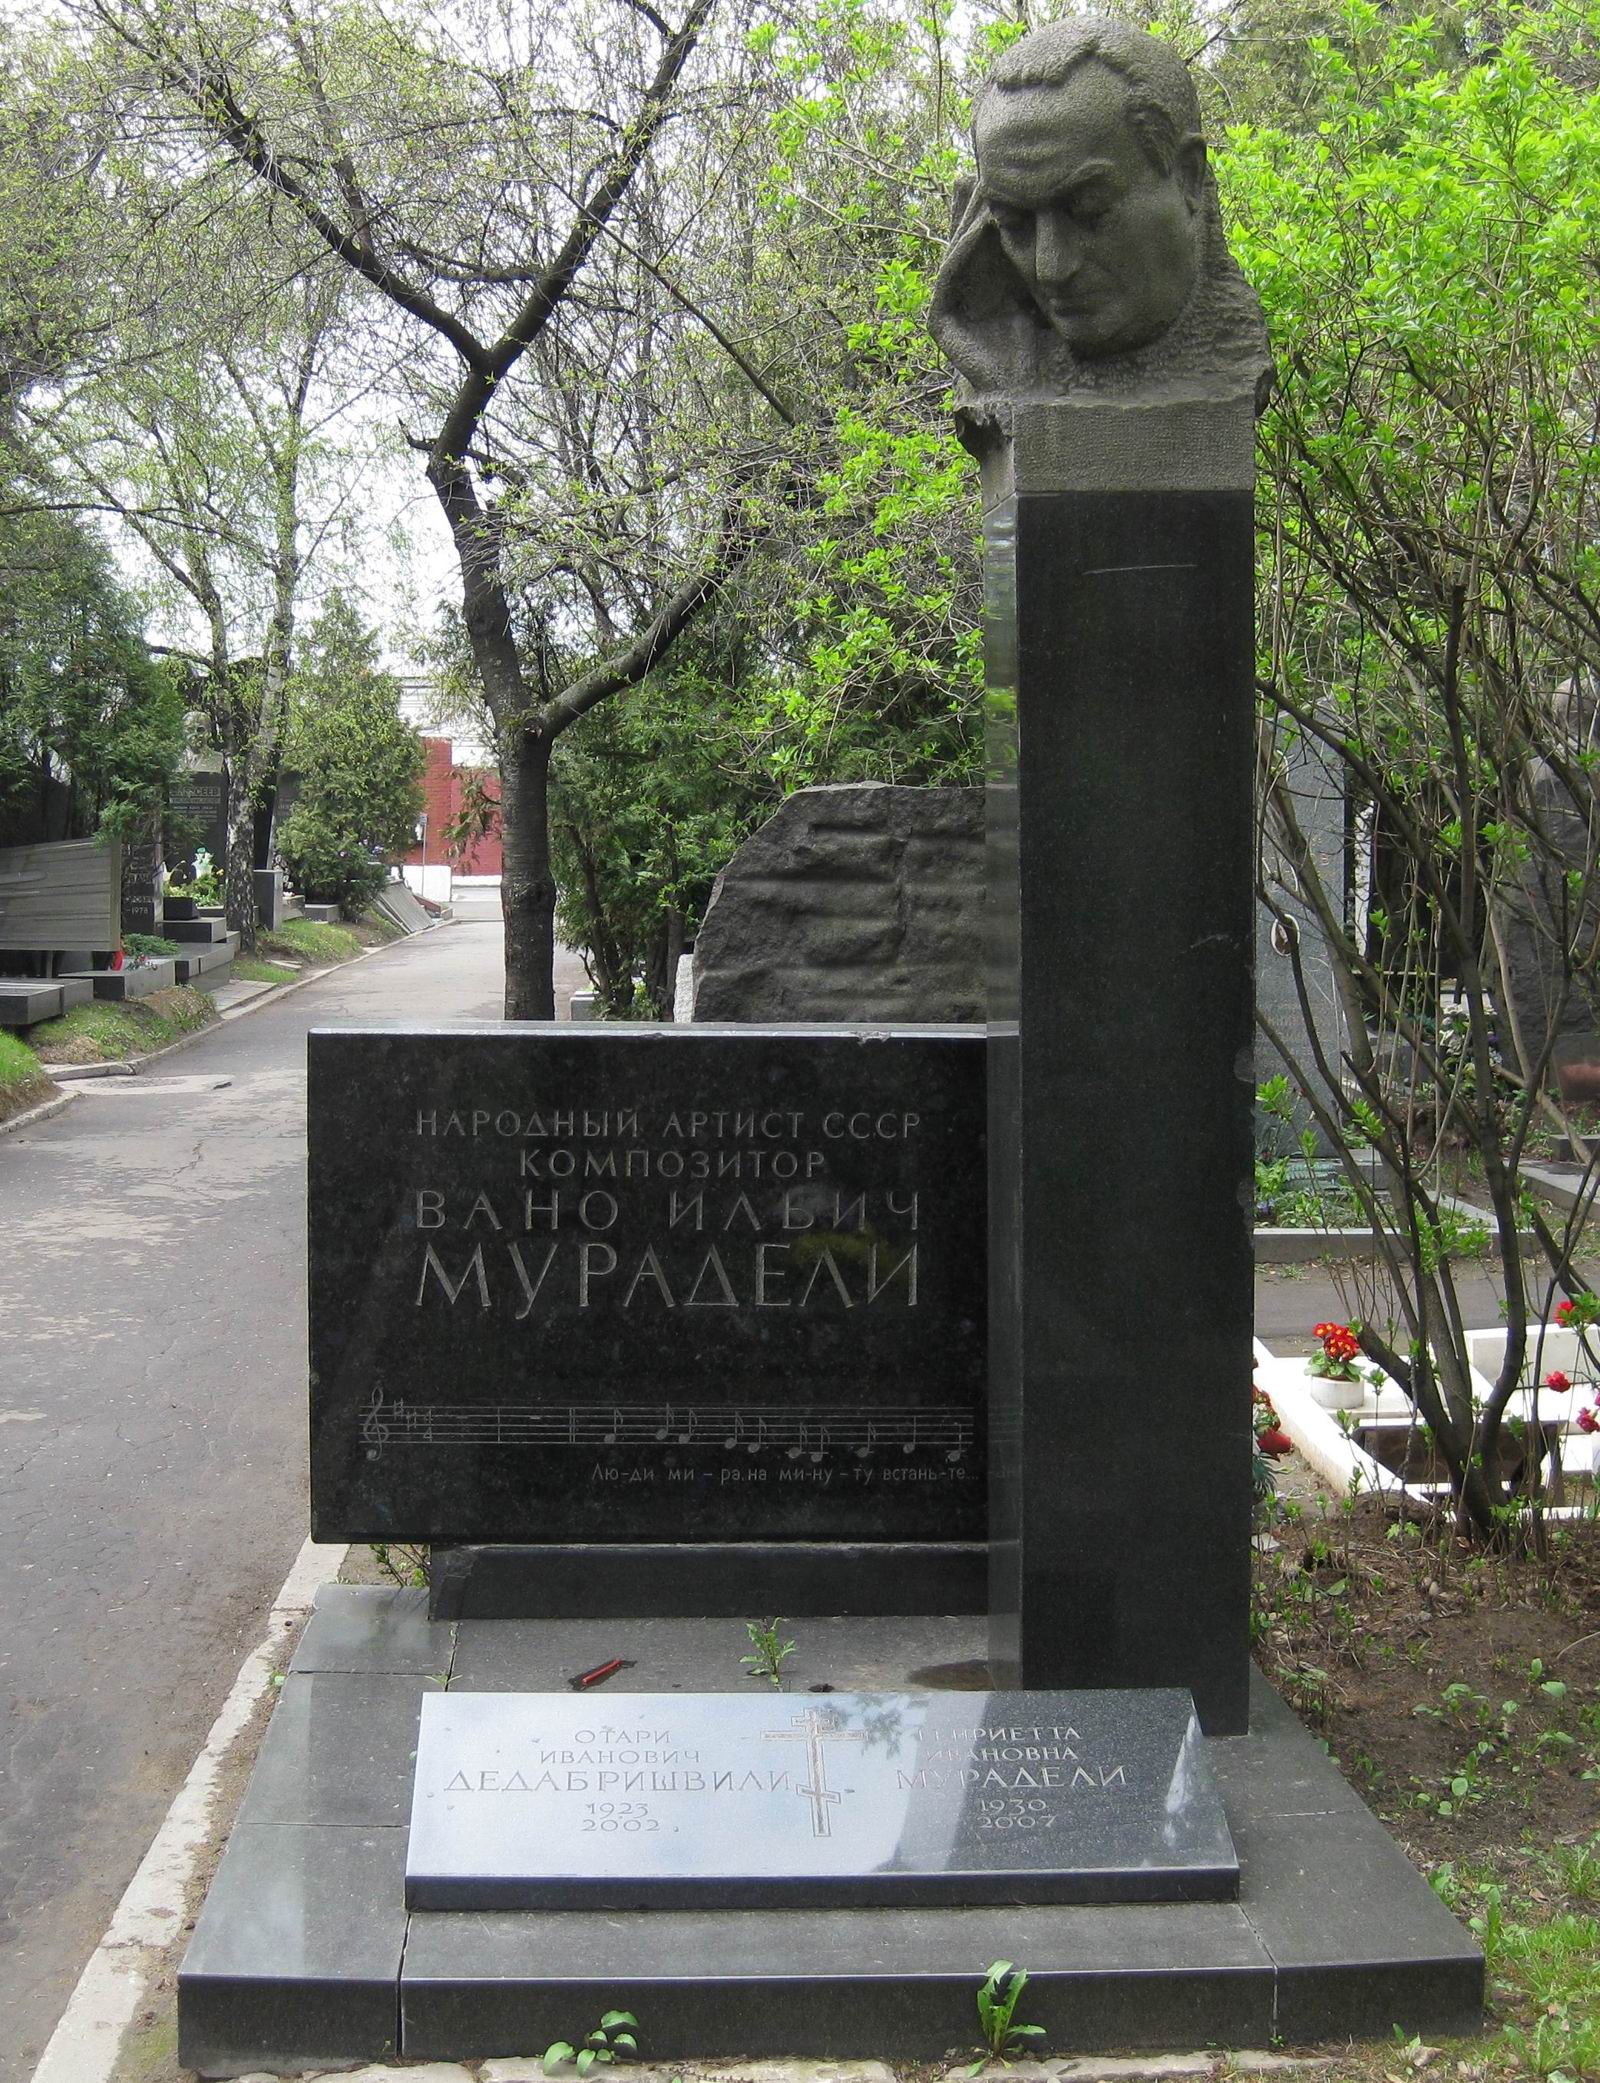 Памятник на могиле Мурадели В.И. (1908-1970), ск. Н.Никогосян, арх. Т.Никогосян, на Новодевичьем кладбище (7-7-11).